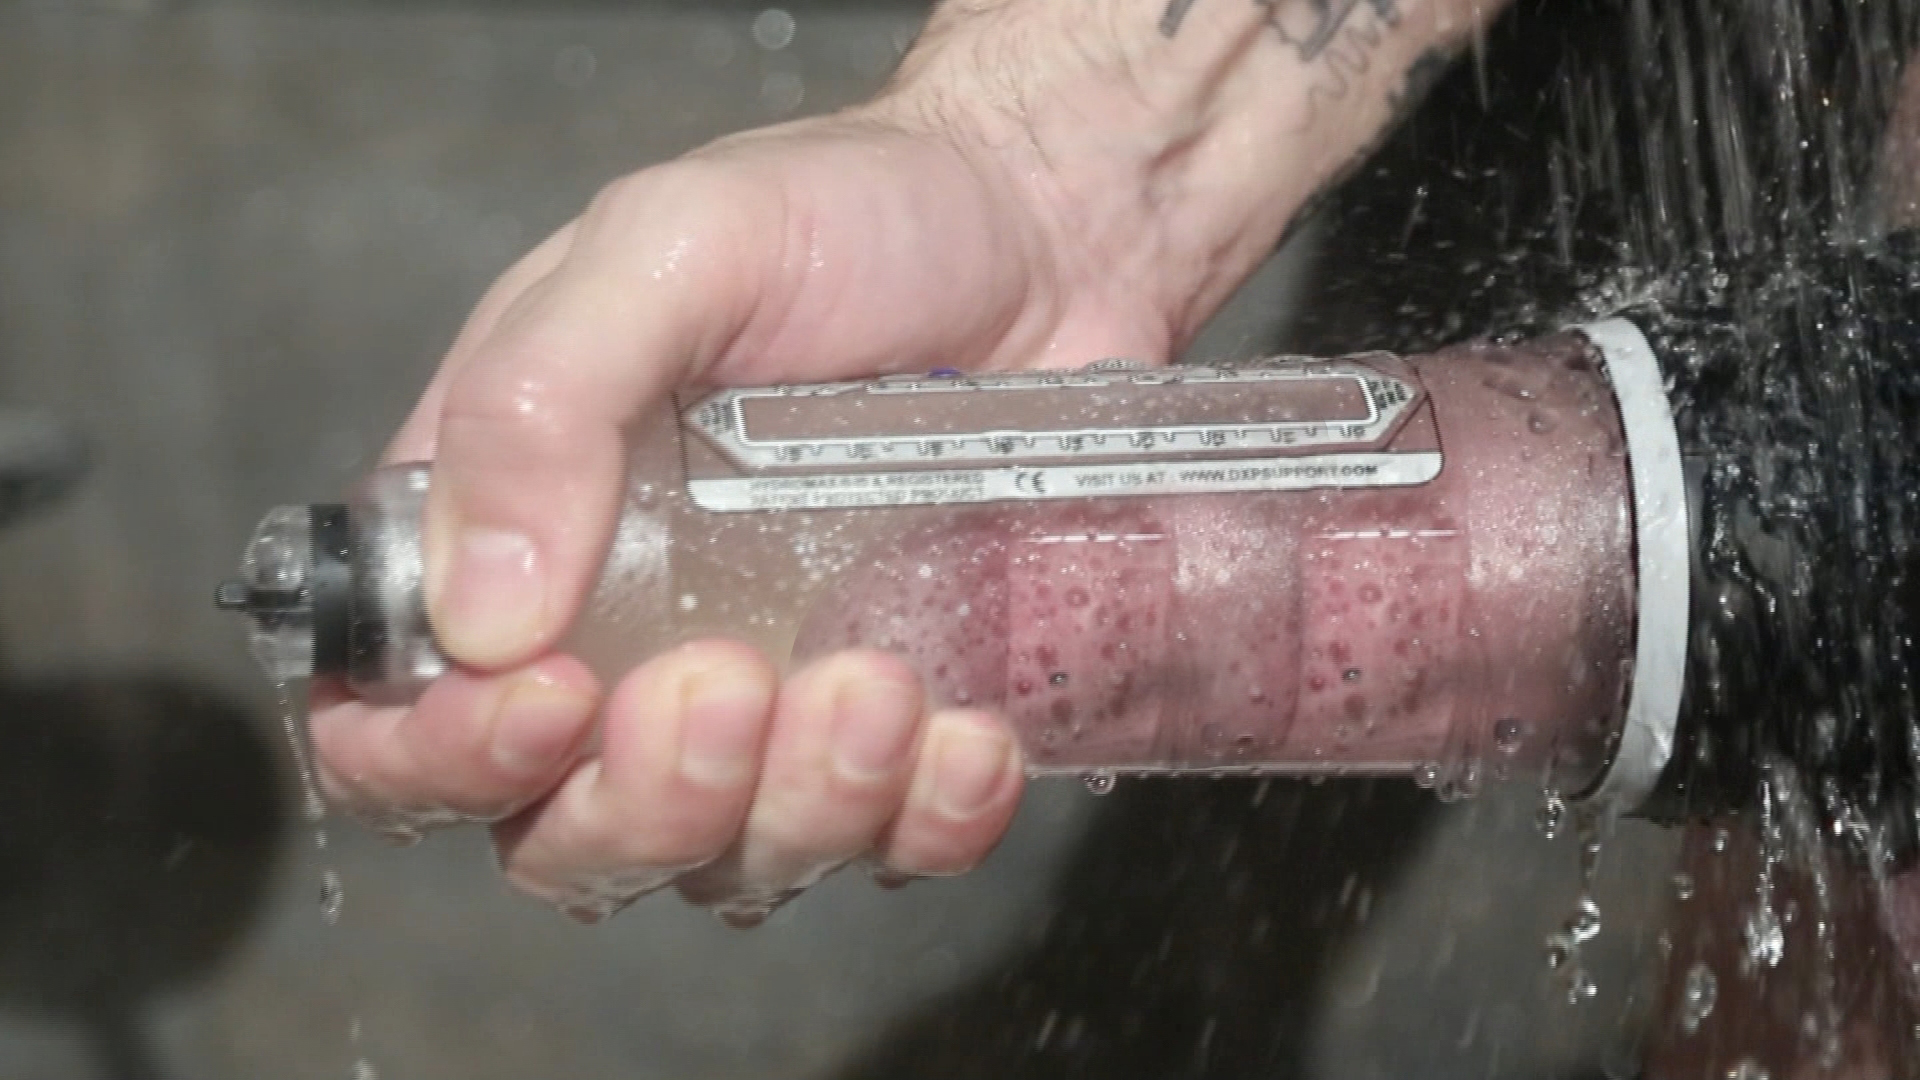 Bathmate Hydro Pump demonstration with gay porn star Austin Wolf - effective penis enlargement tool